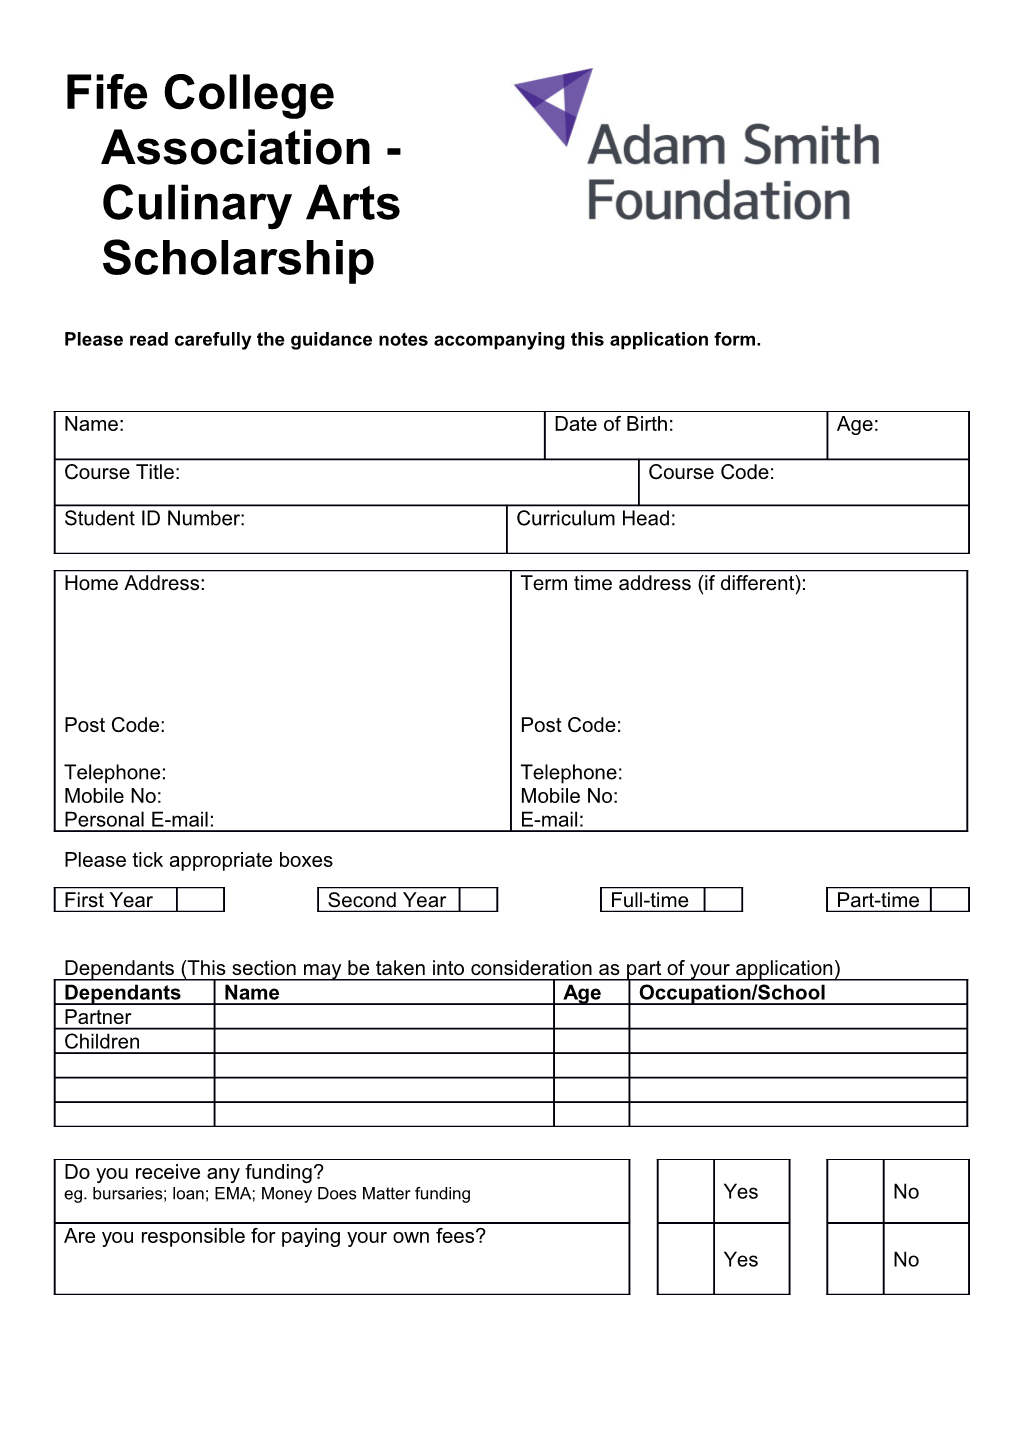 Fife College Association Culinary Arts Yr1 Scholarship Application Form 2016